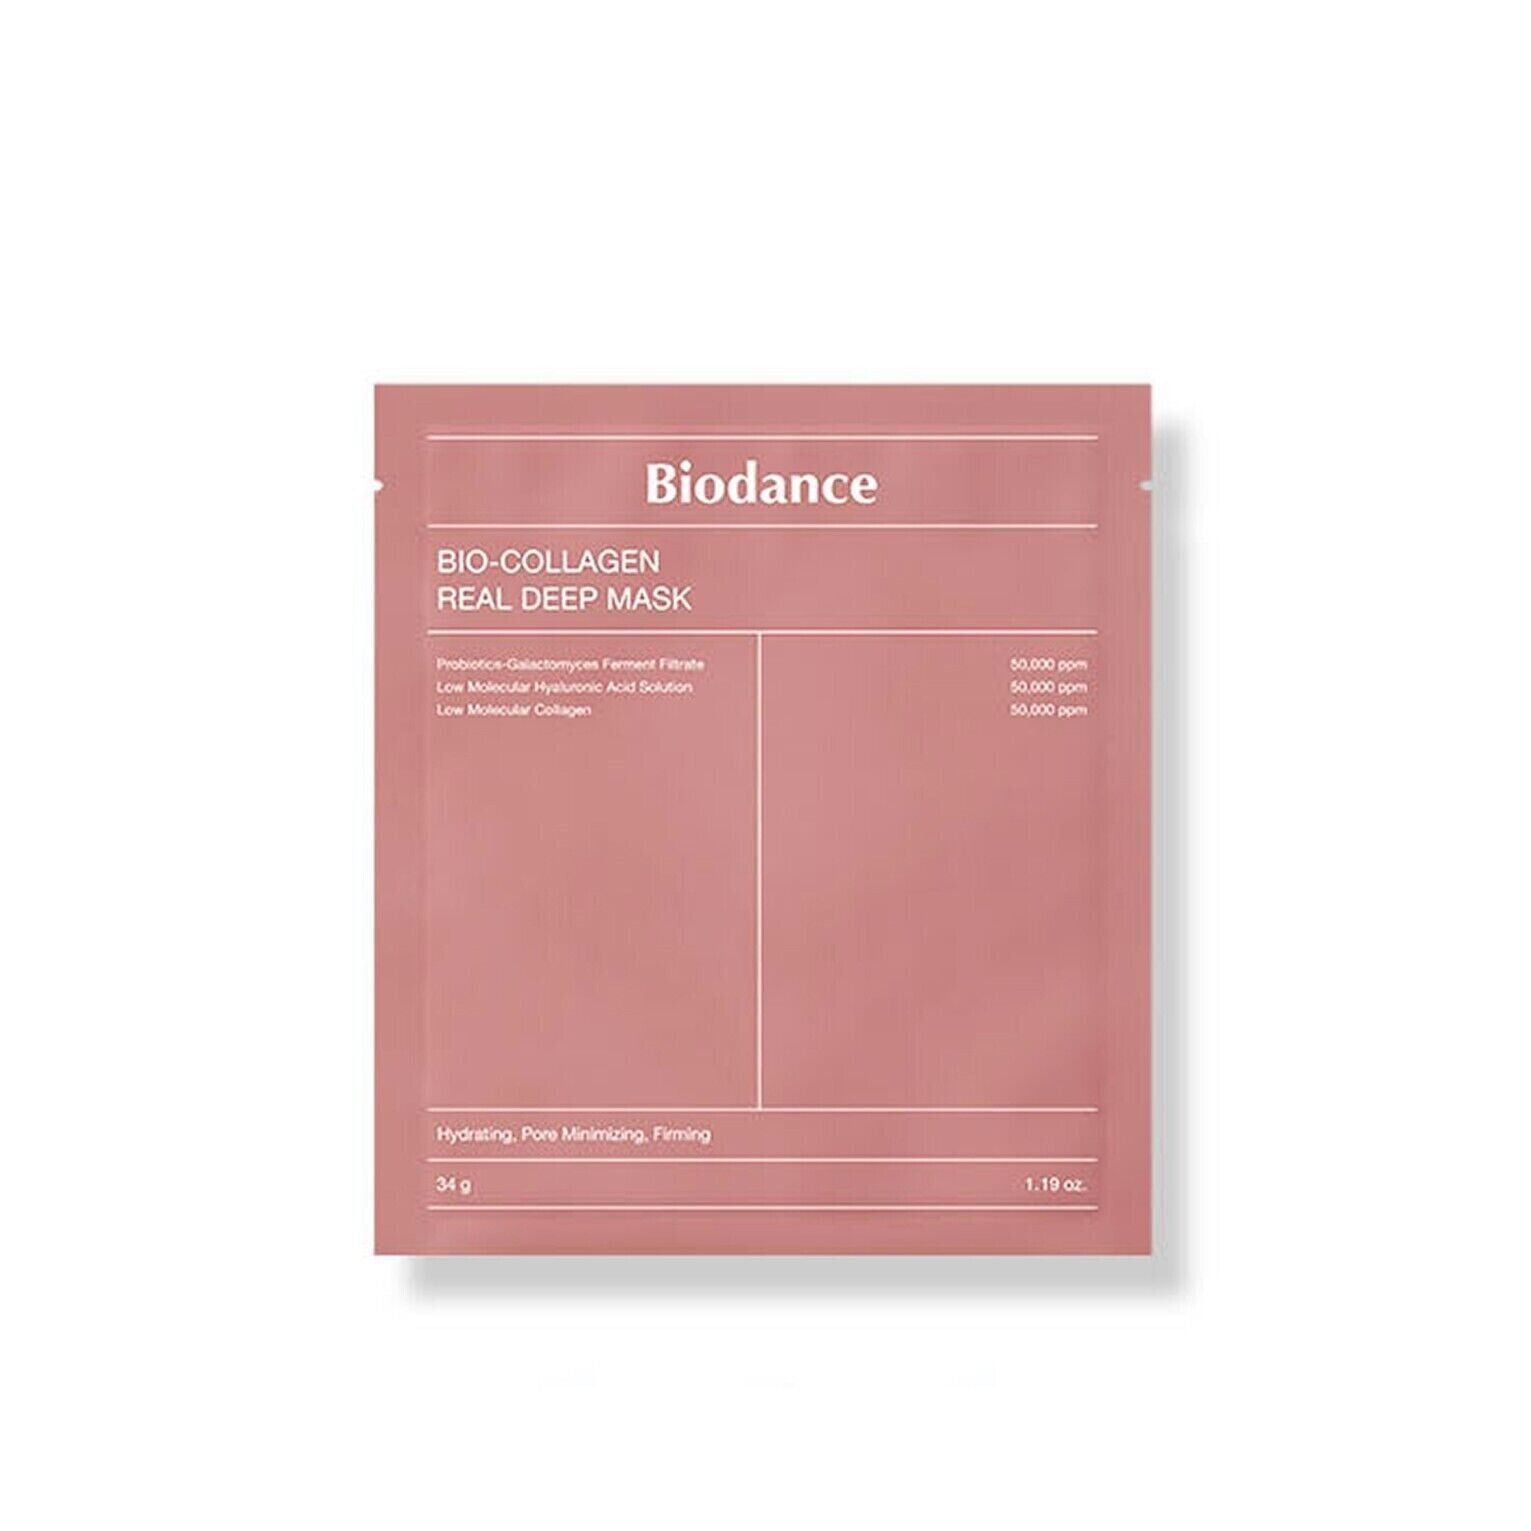 BIODANCE - Bio-Collagen Real Deep Mask Sheet